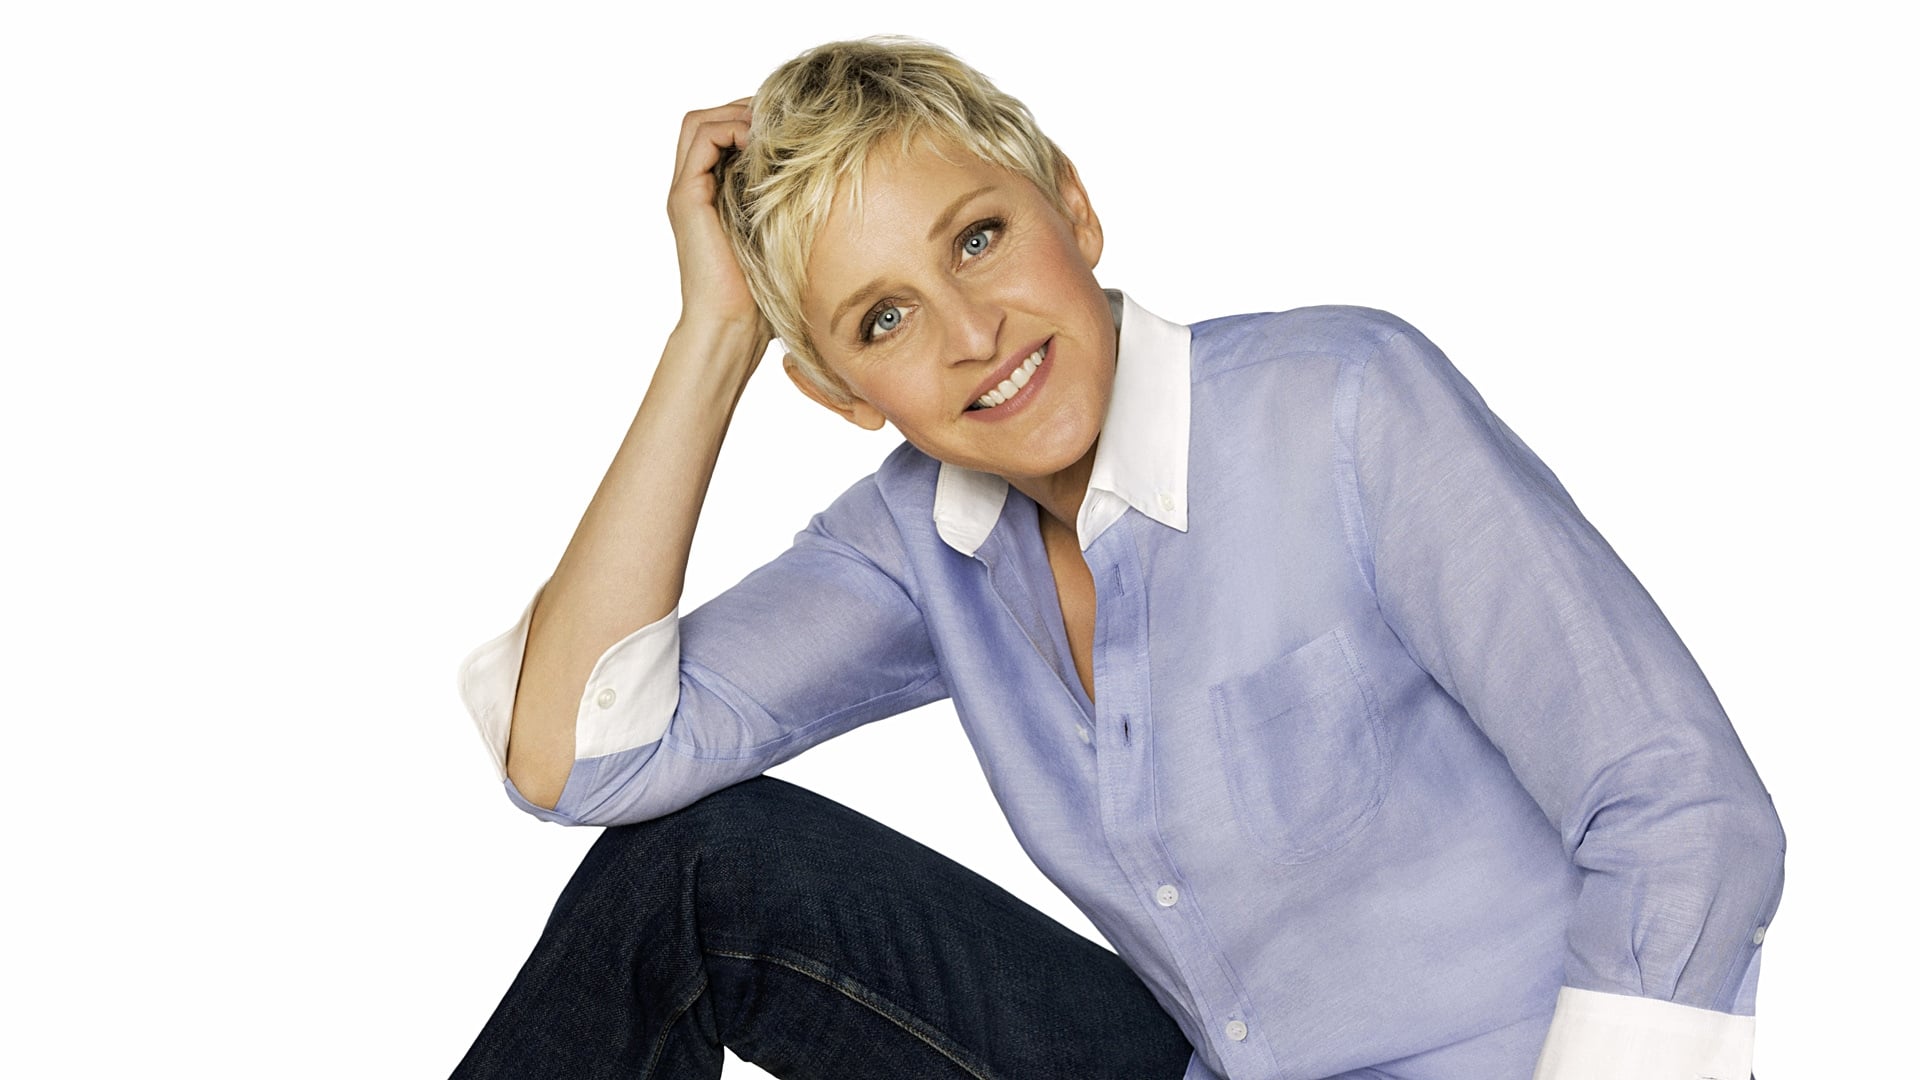 The Ellen DeGeneres Show - Season 14 Episode 61 : Day 7 of 12 Days, T.J. Miller, Chrissy Metz, Kane Brown